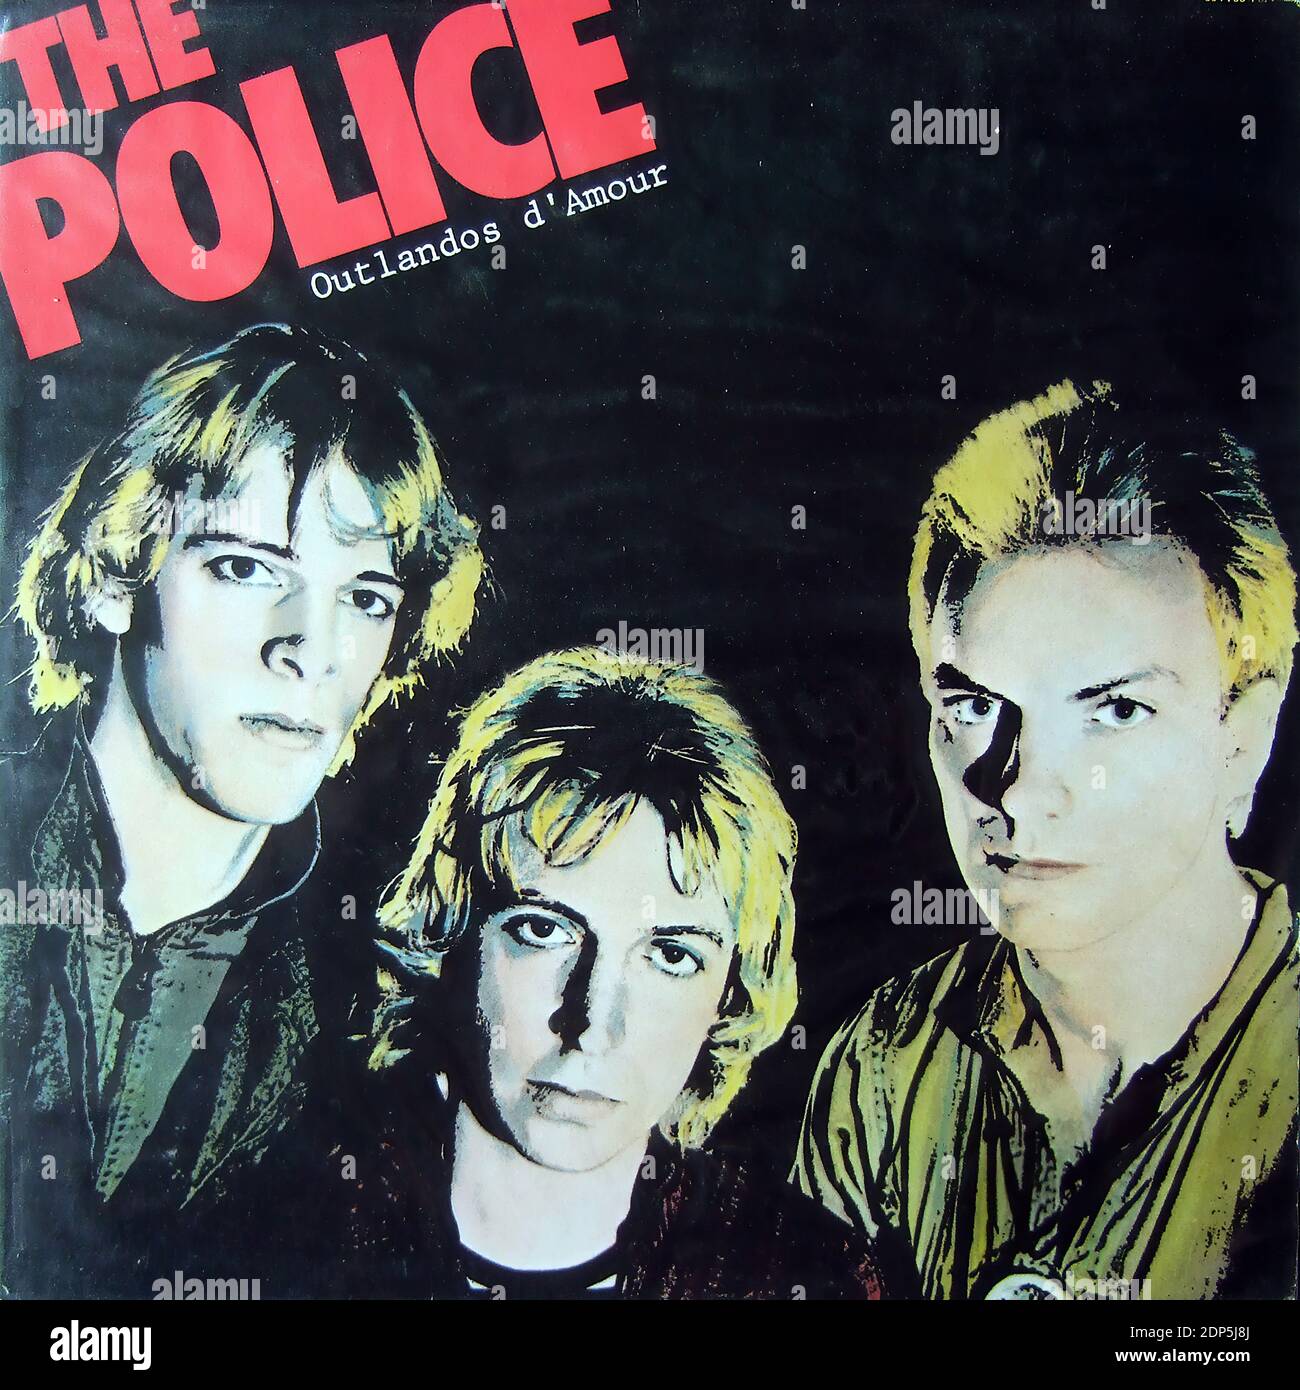 the-police-outlandos-damour-vintage-vinyl-album-cover-2DP5J8J.jpg